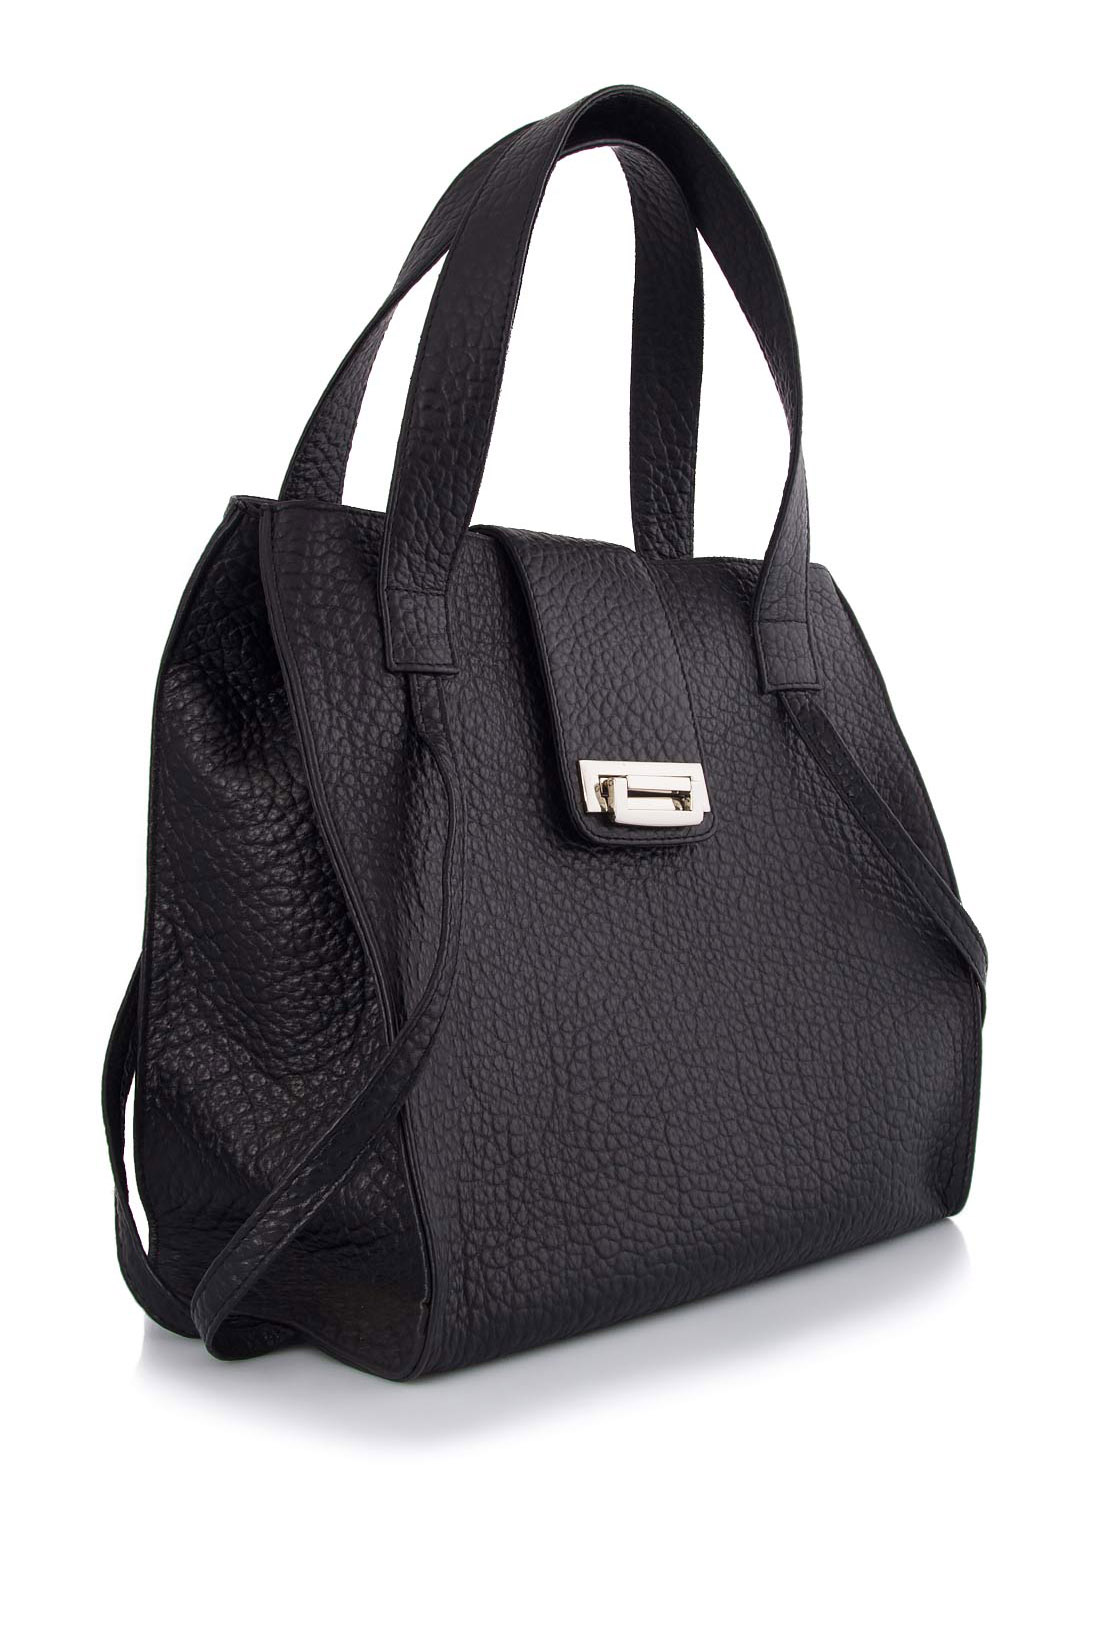 Medium bag in black leather Mihaela Glavan  image 1